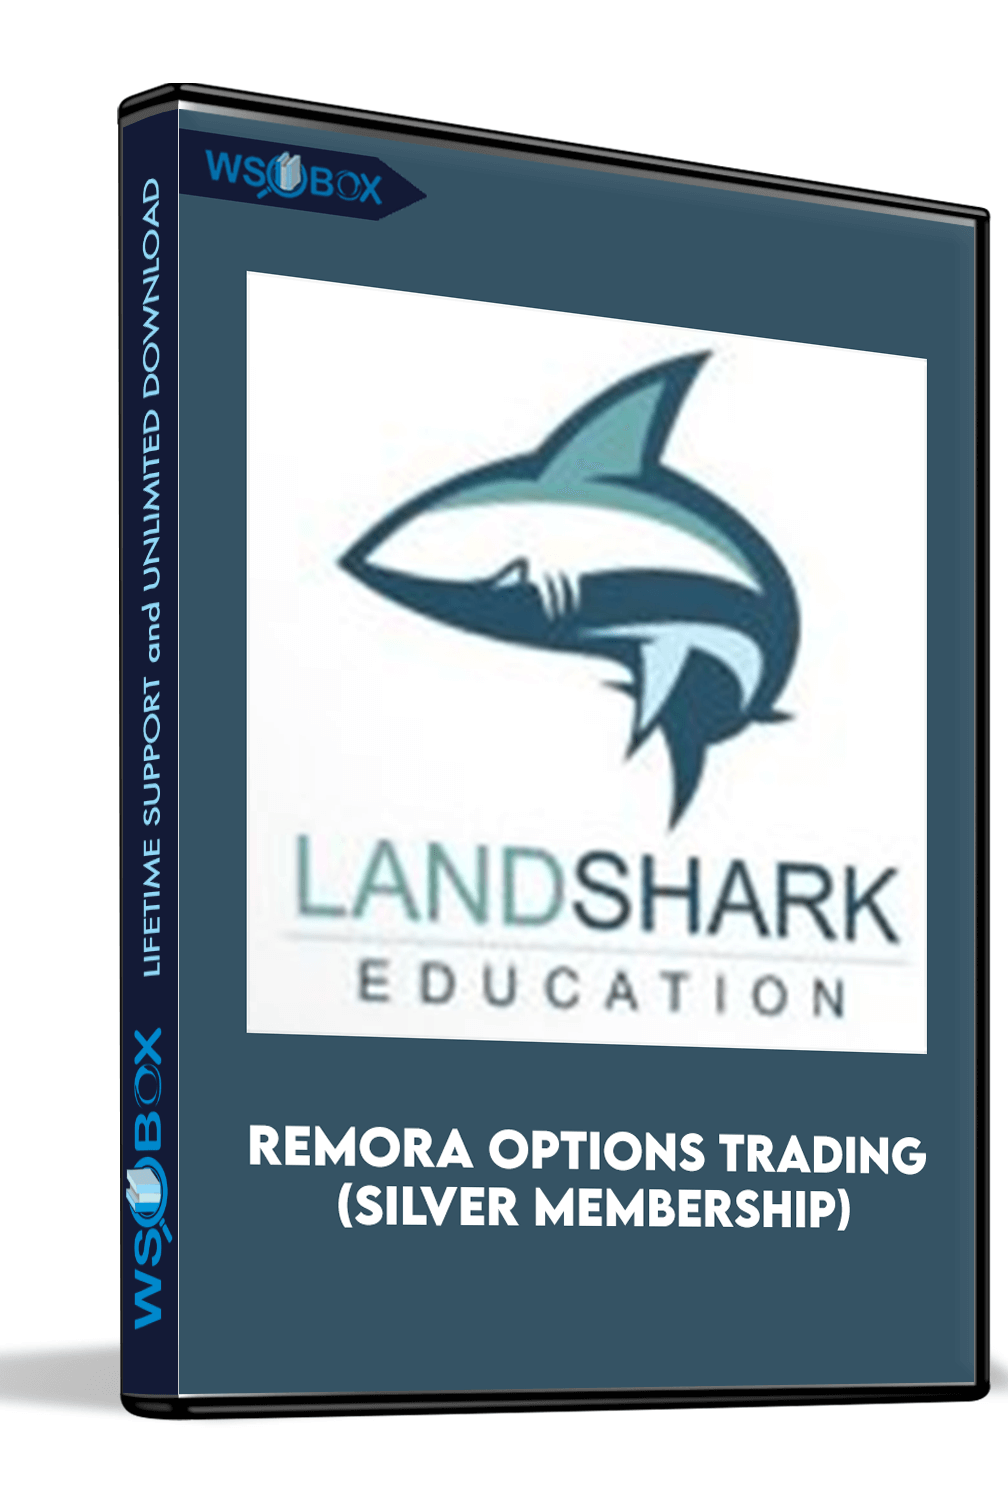 remora-options-trading-silver-membership